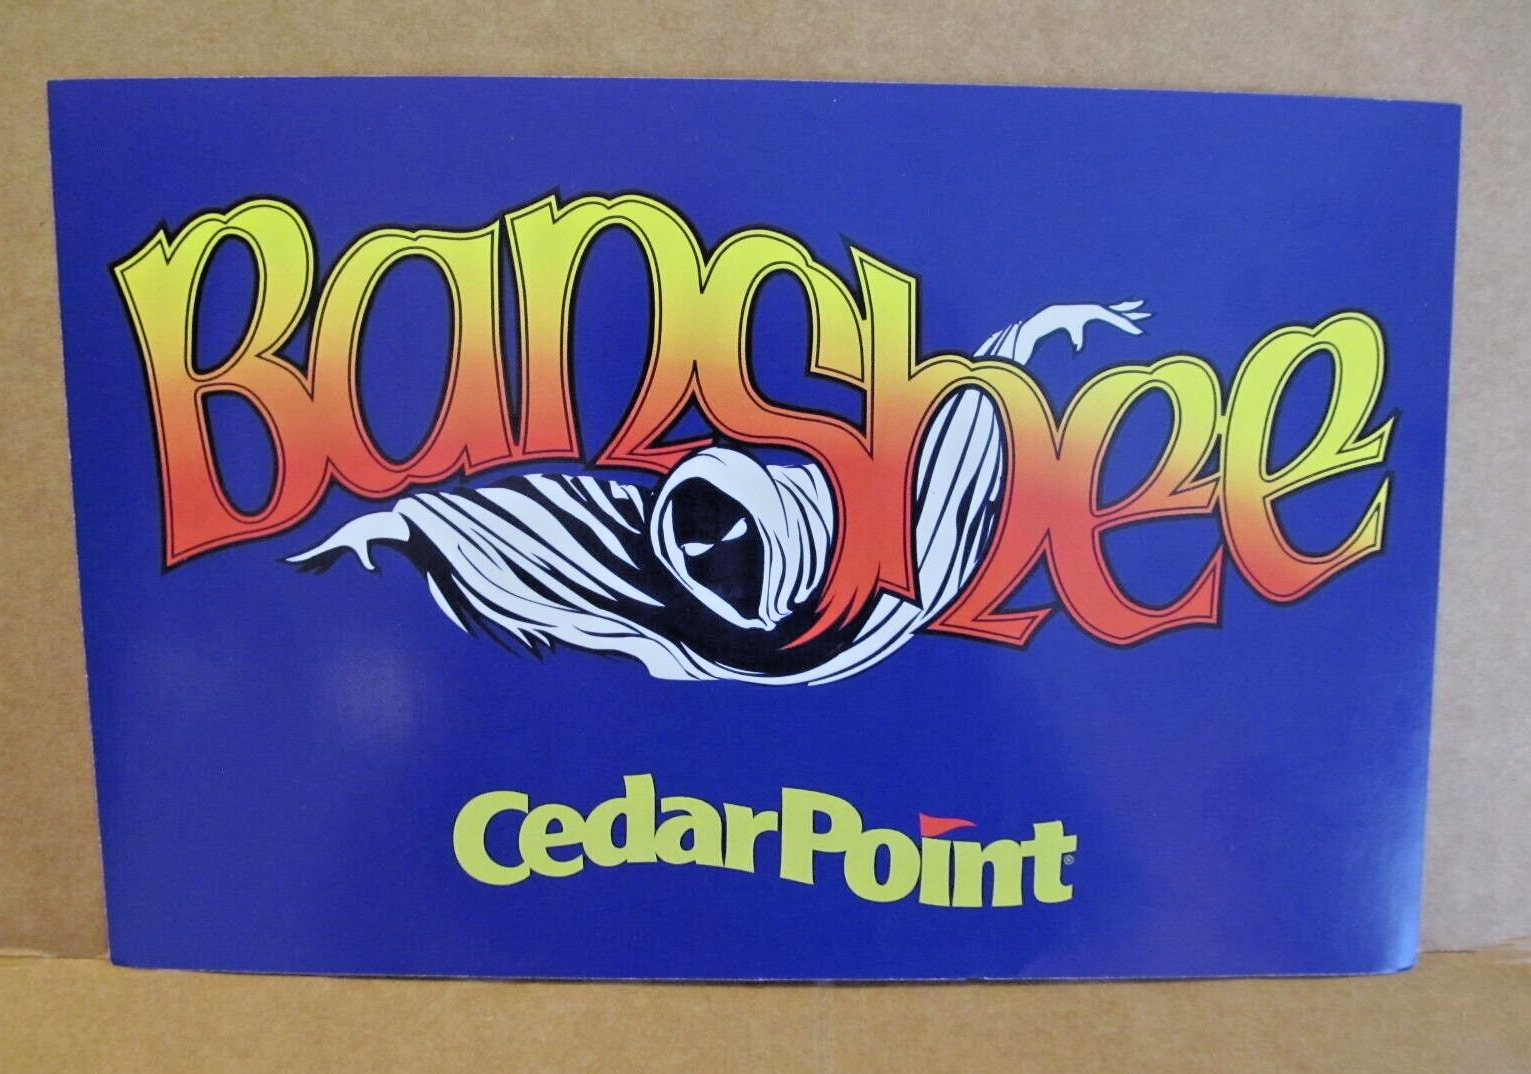 Cedar Point Amusement Park 1996 Banshee Roller Coaster Advertising Mailer MANTIS